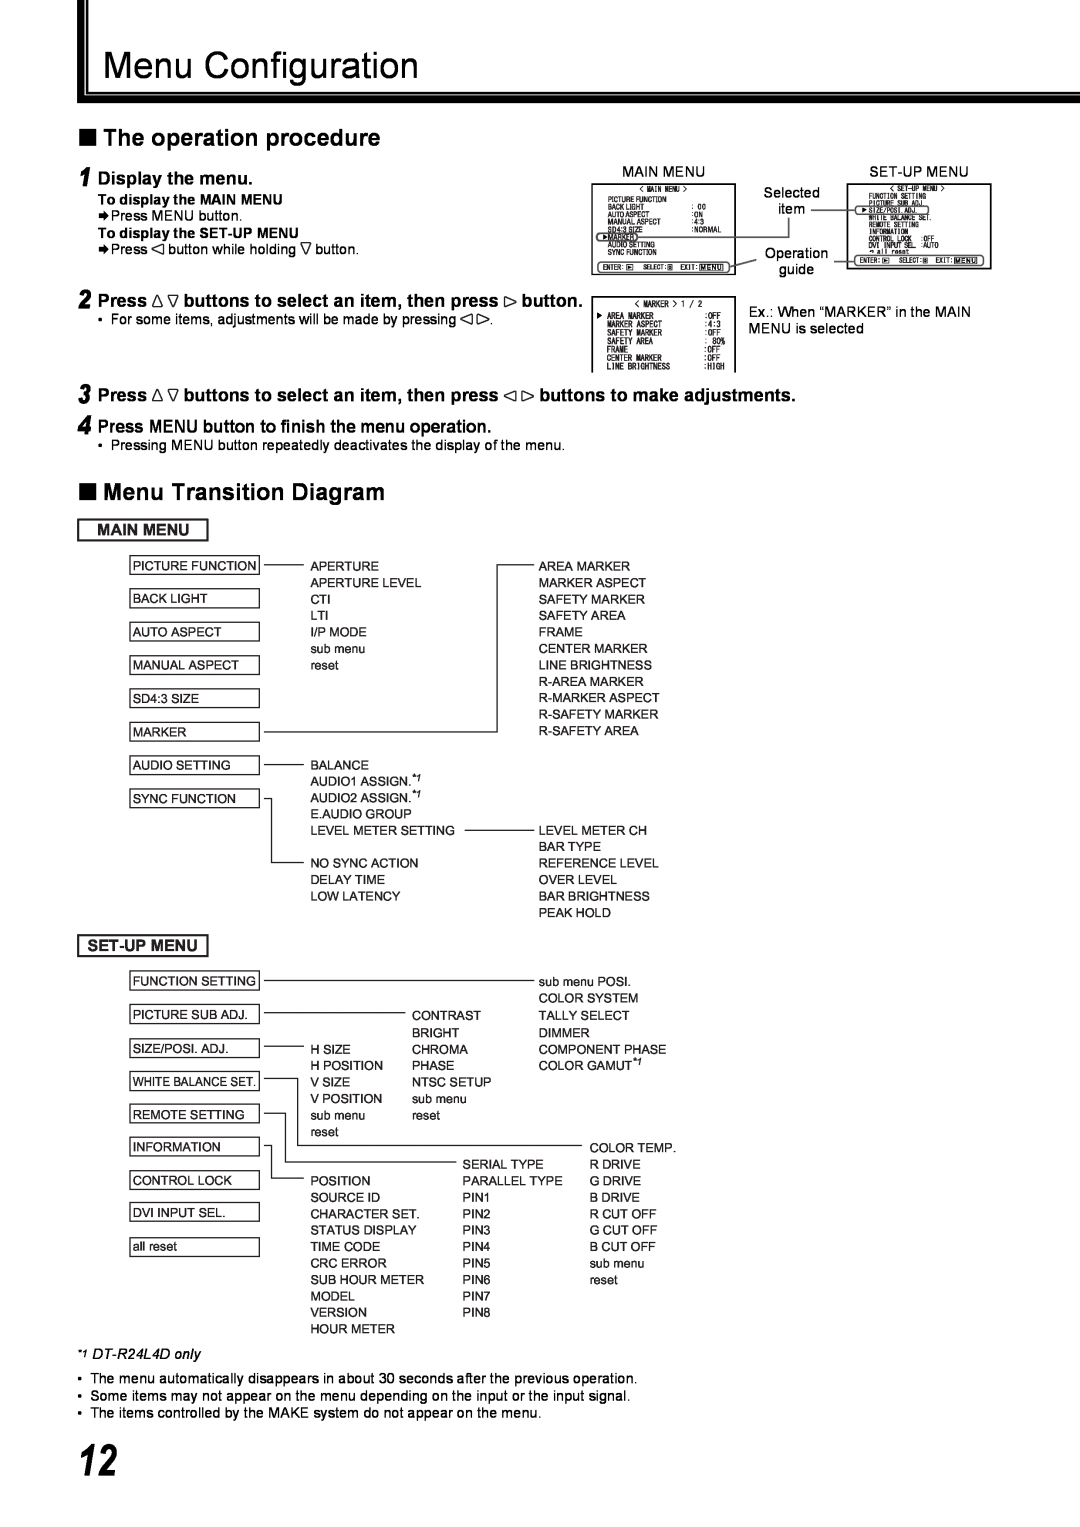 JVC DT-R17L4D Menu Conﬁguration, „ The operation procedure, „ Menu Transition Diagram, Display the menu, Main Menu 